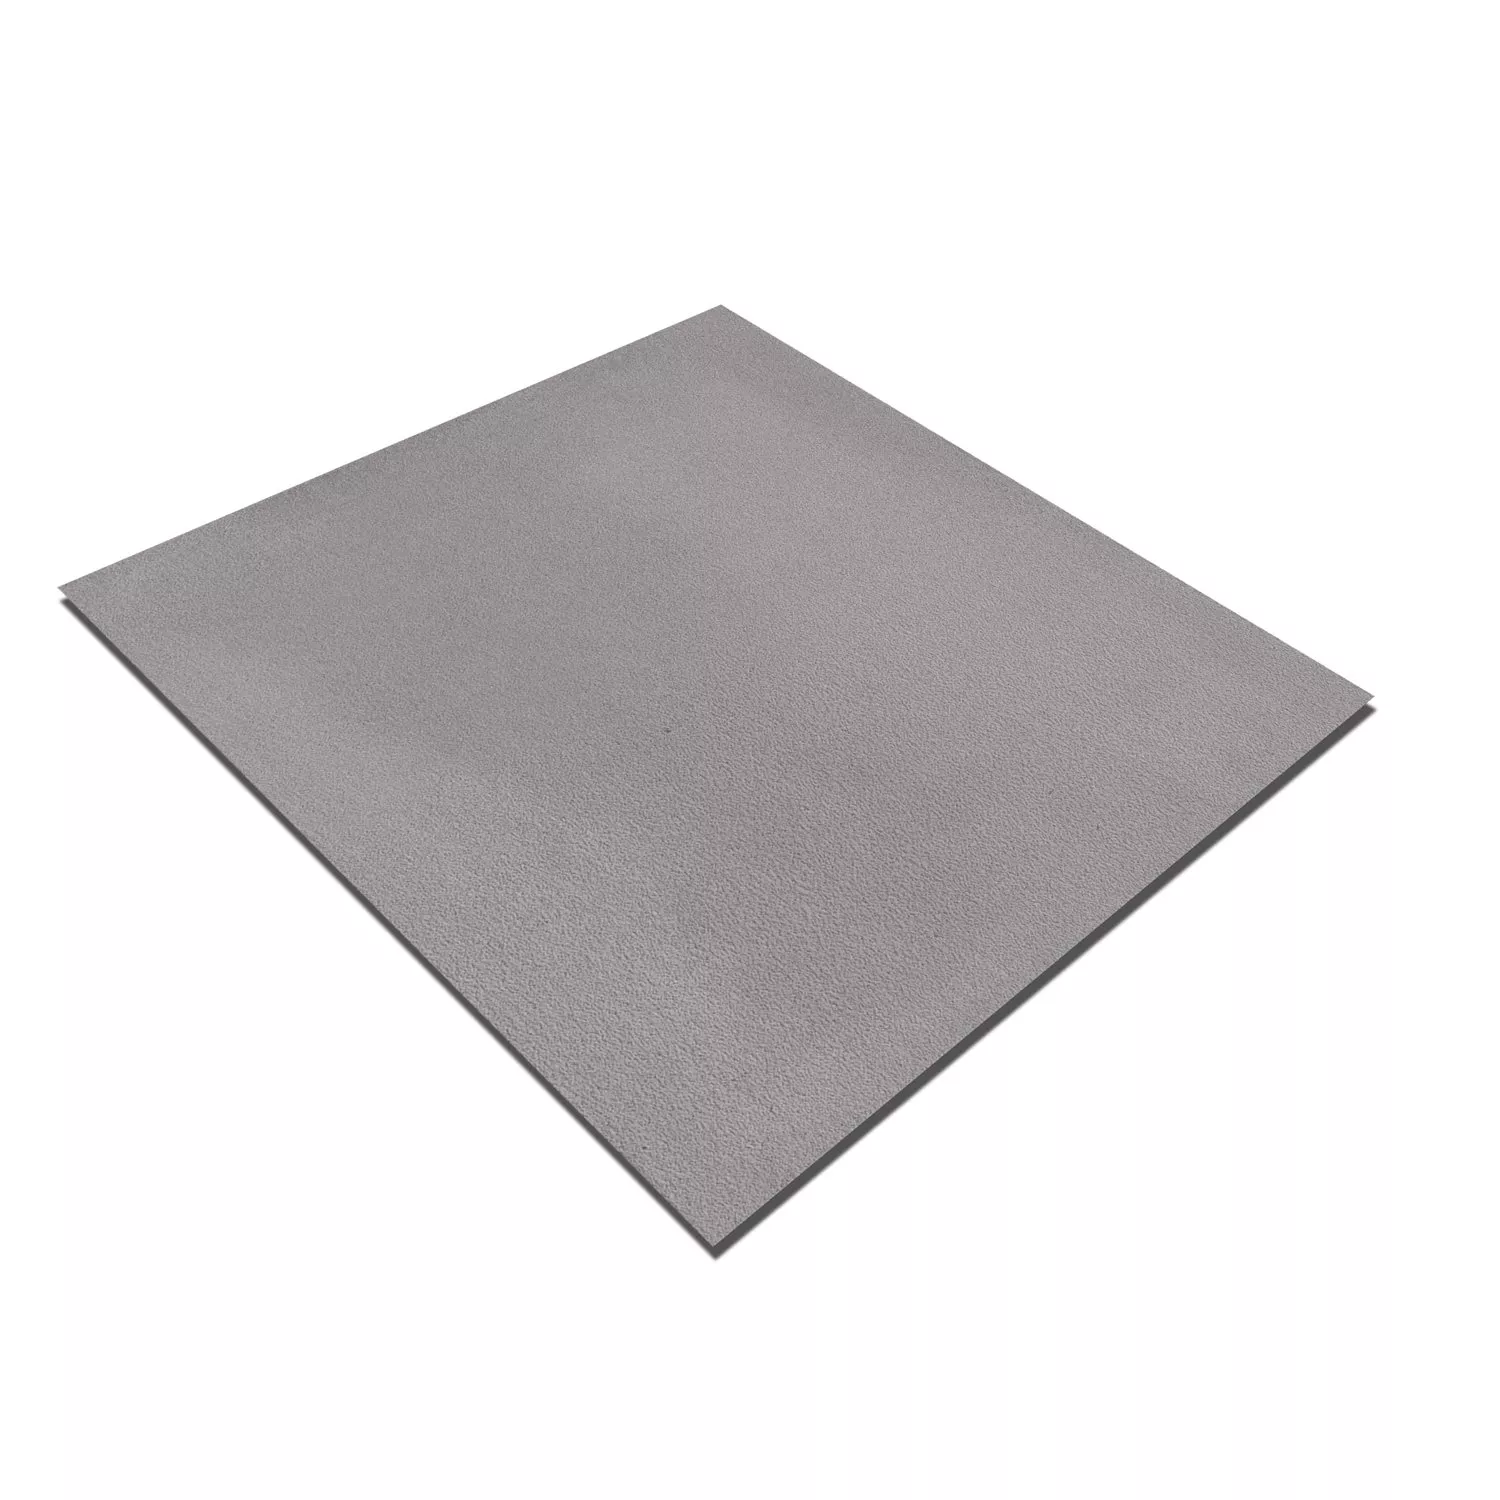 Cement Tiles Optic Arena Basic Tile Grey 18,6x18,6cm